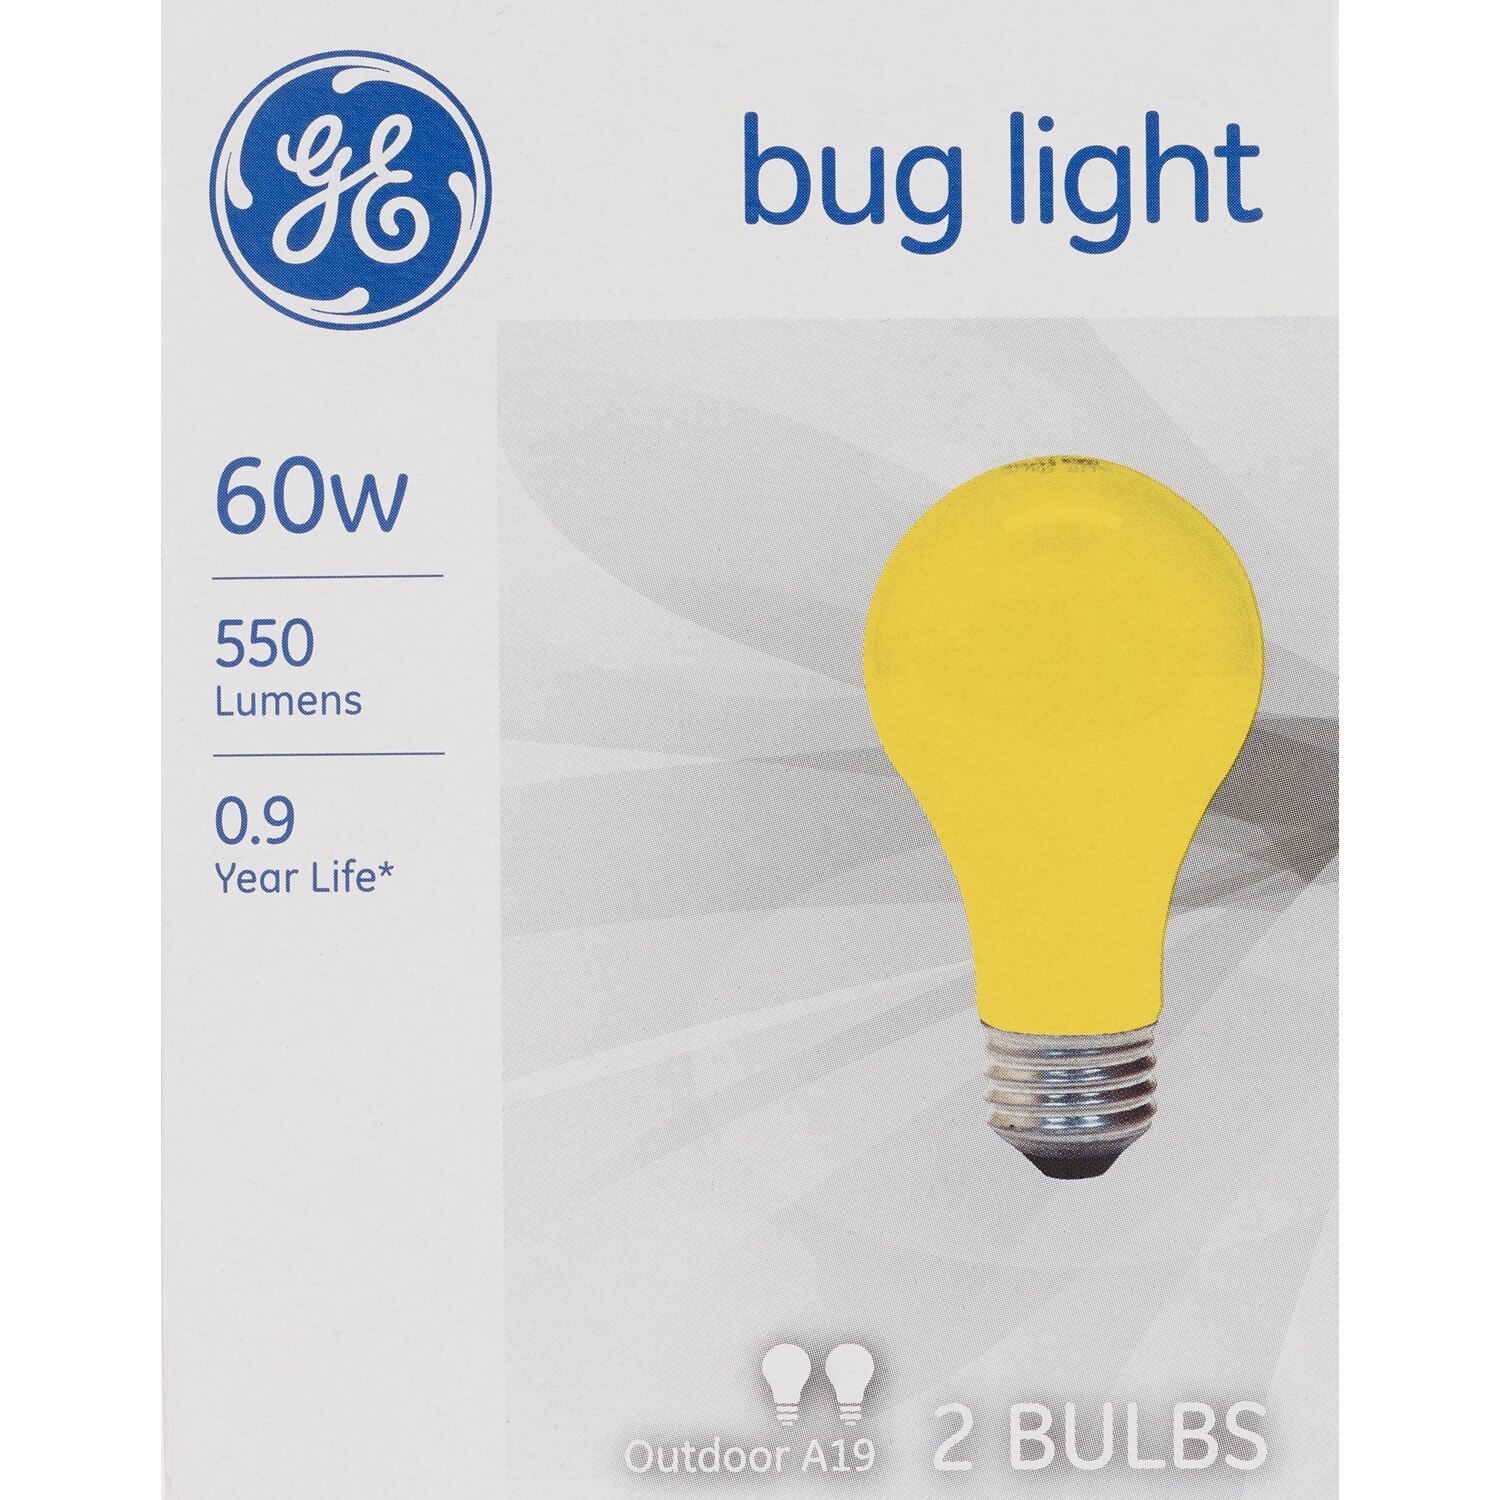 GE 60W Bug Light , 2 Outdoor Bulbs